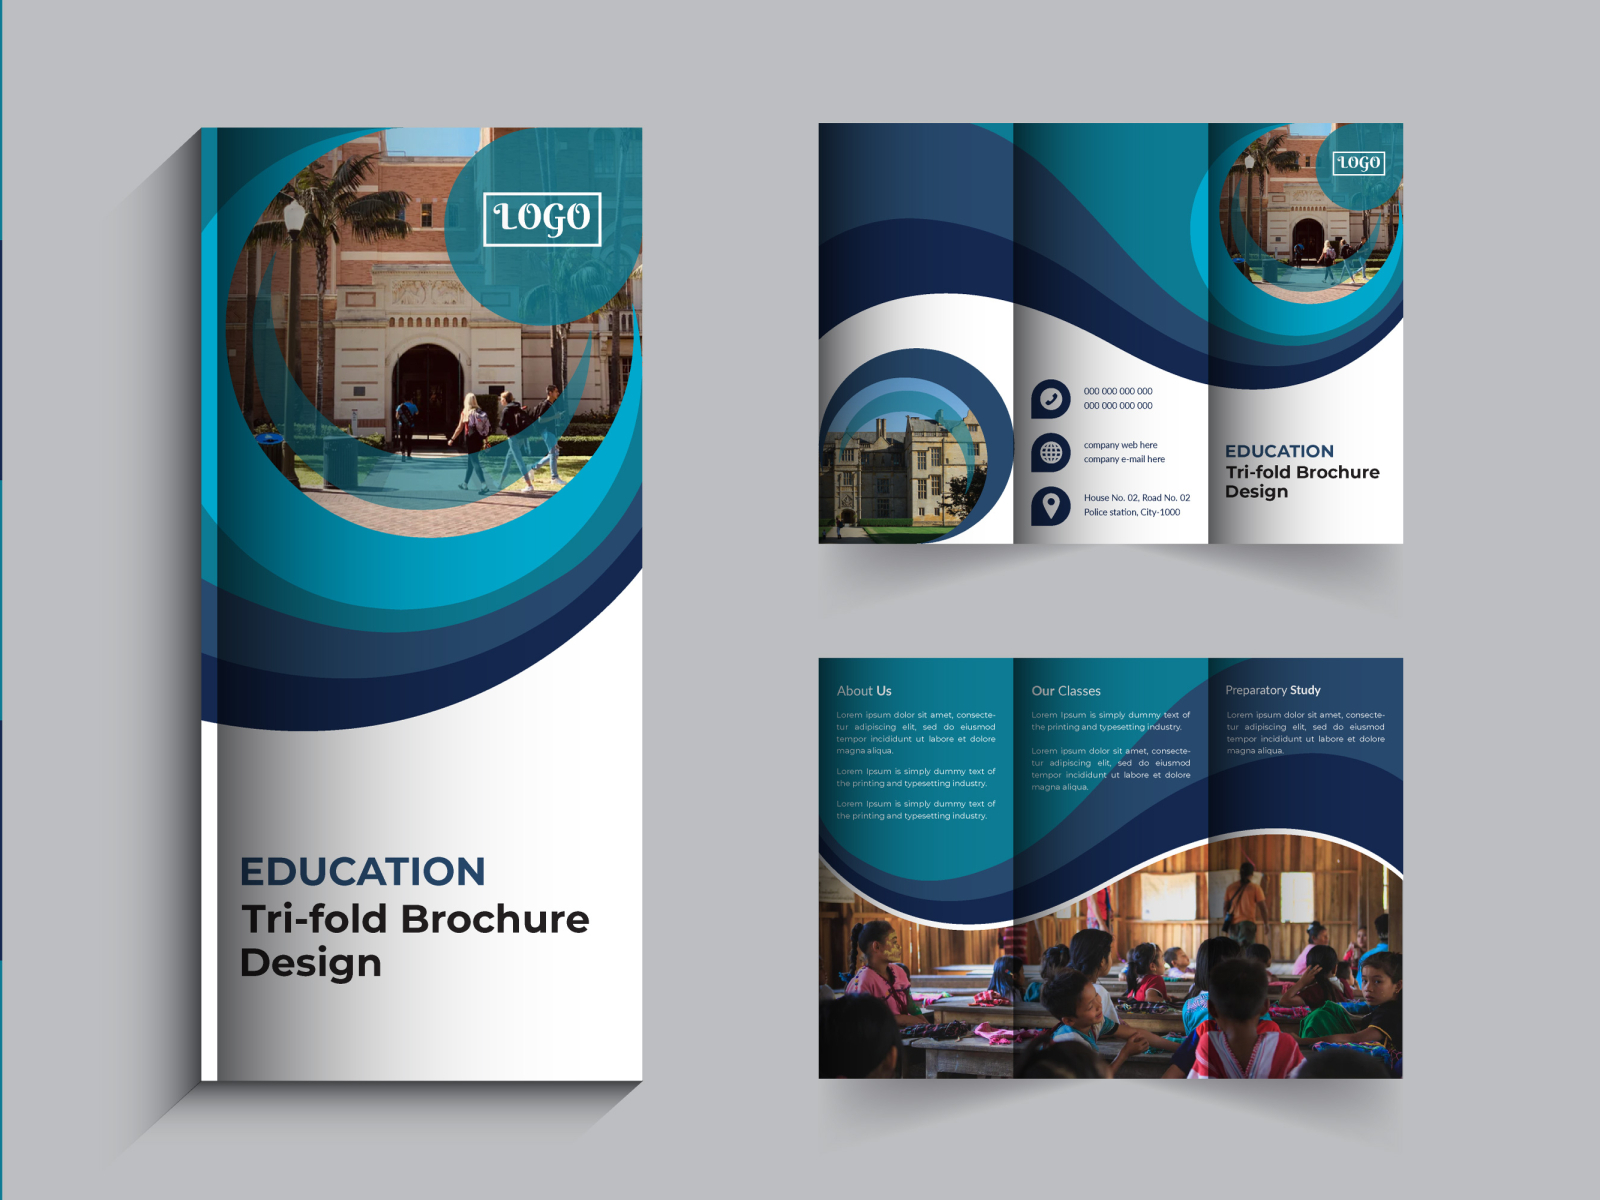 Education Tri-fold Brochure Template Design by hmabdulaziz21 on Regarding School Brochure Design Templates